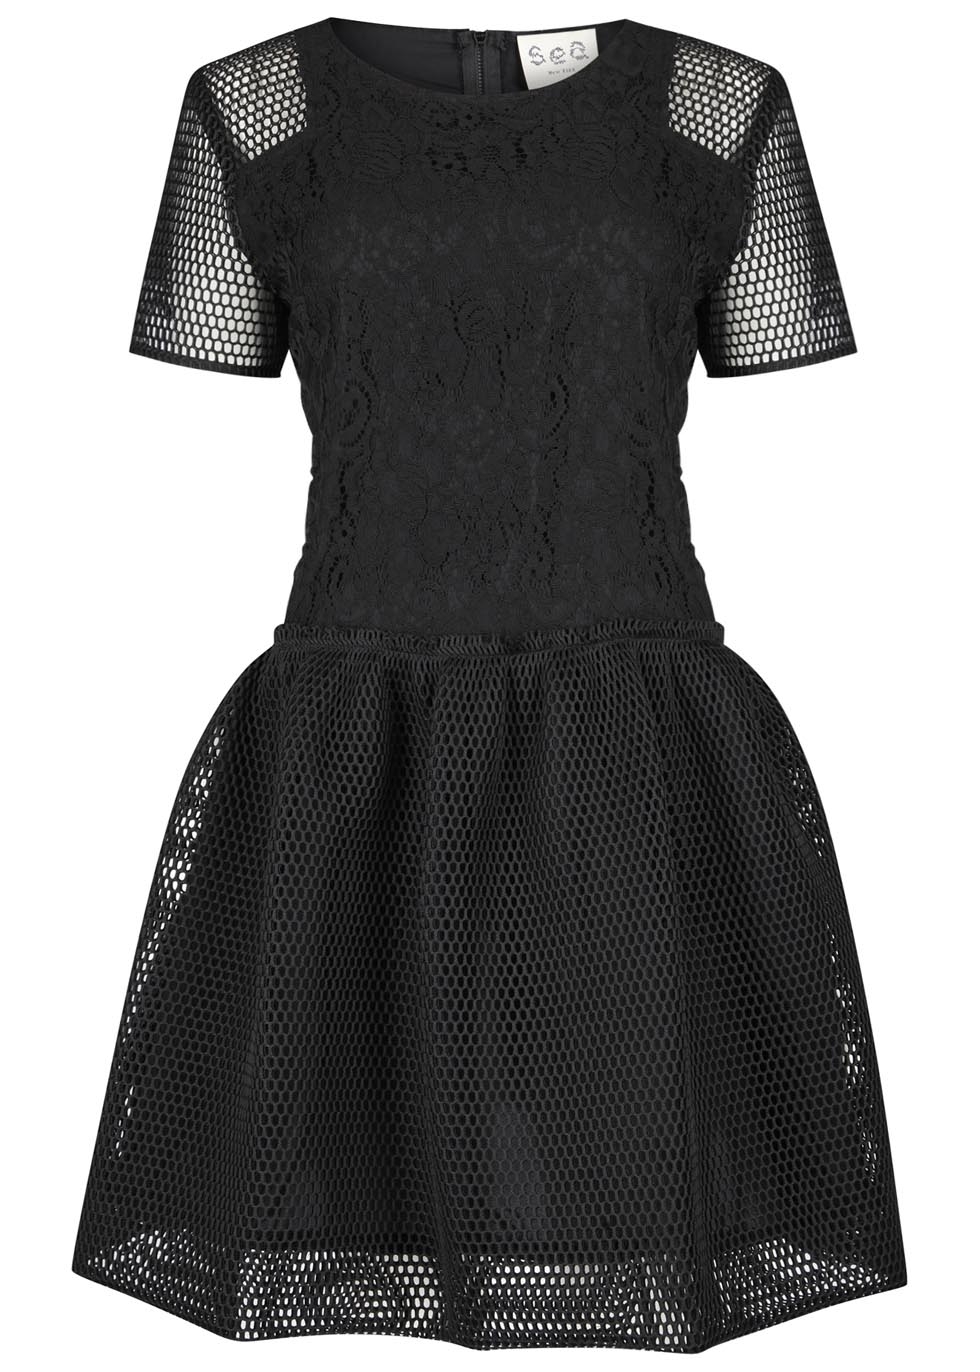 Black neoprene mesh and lace dress